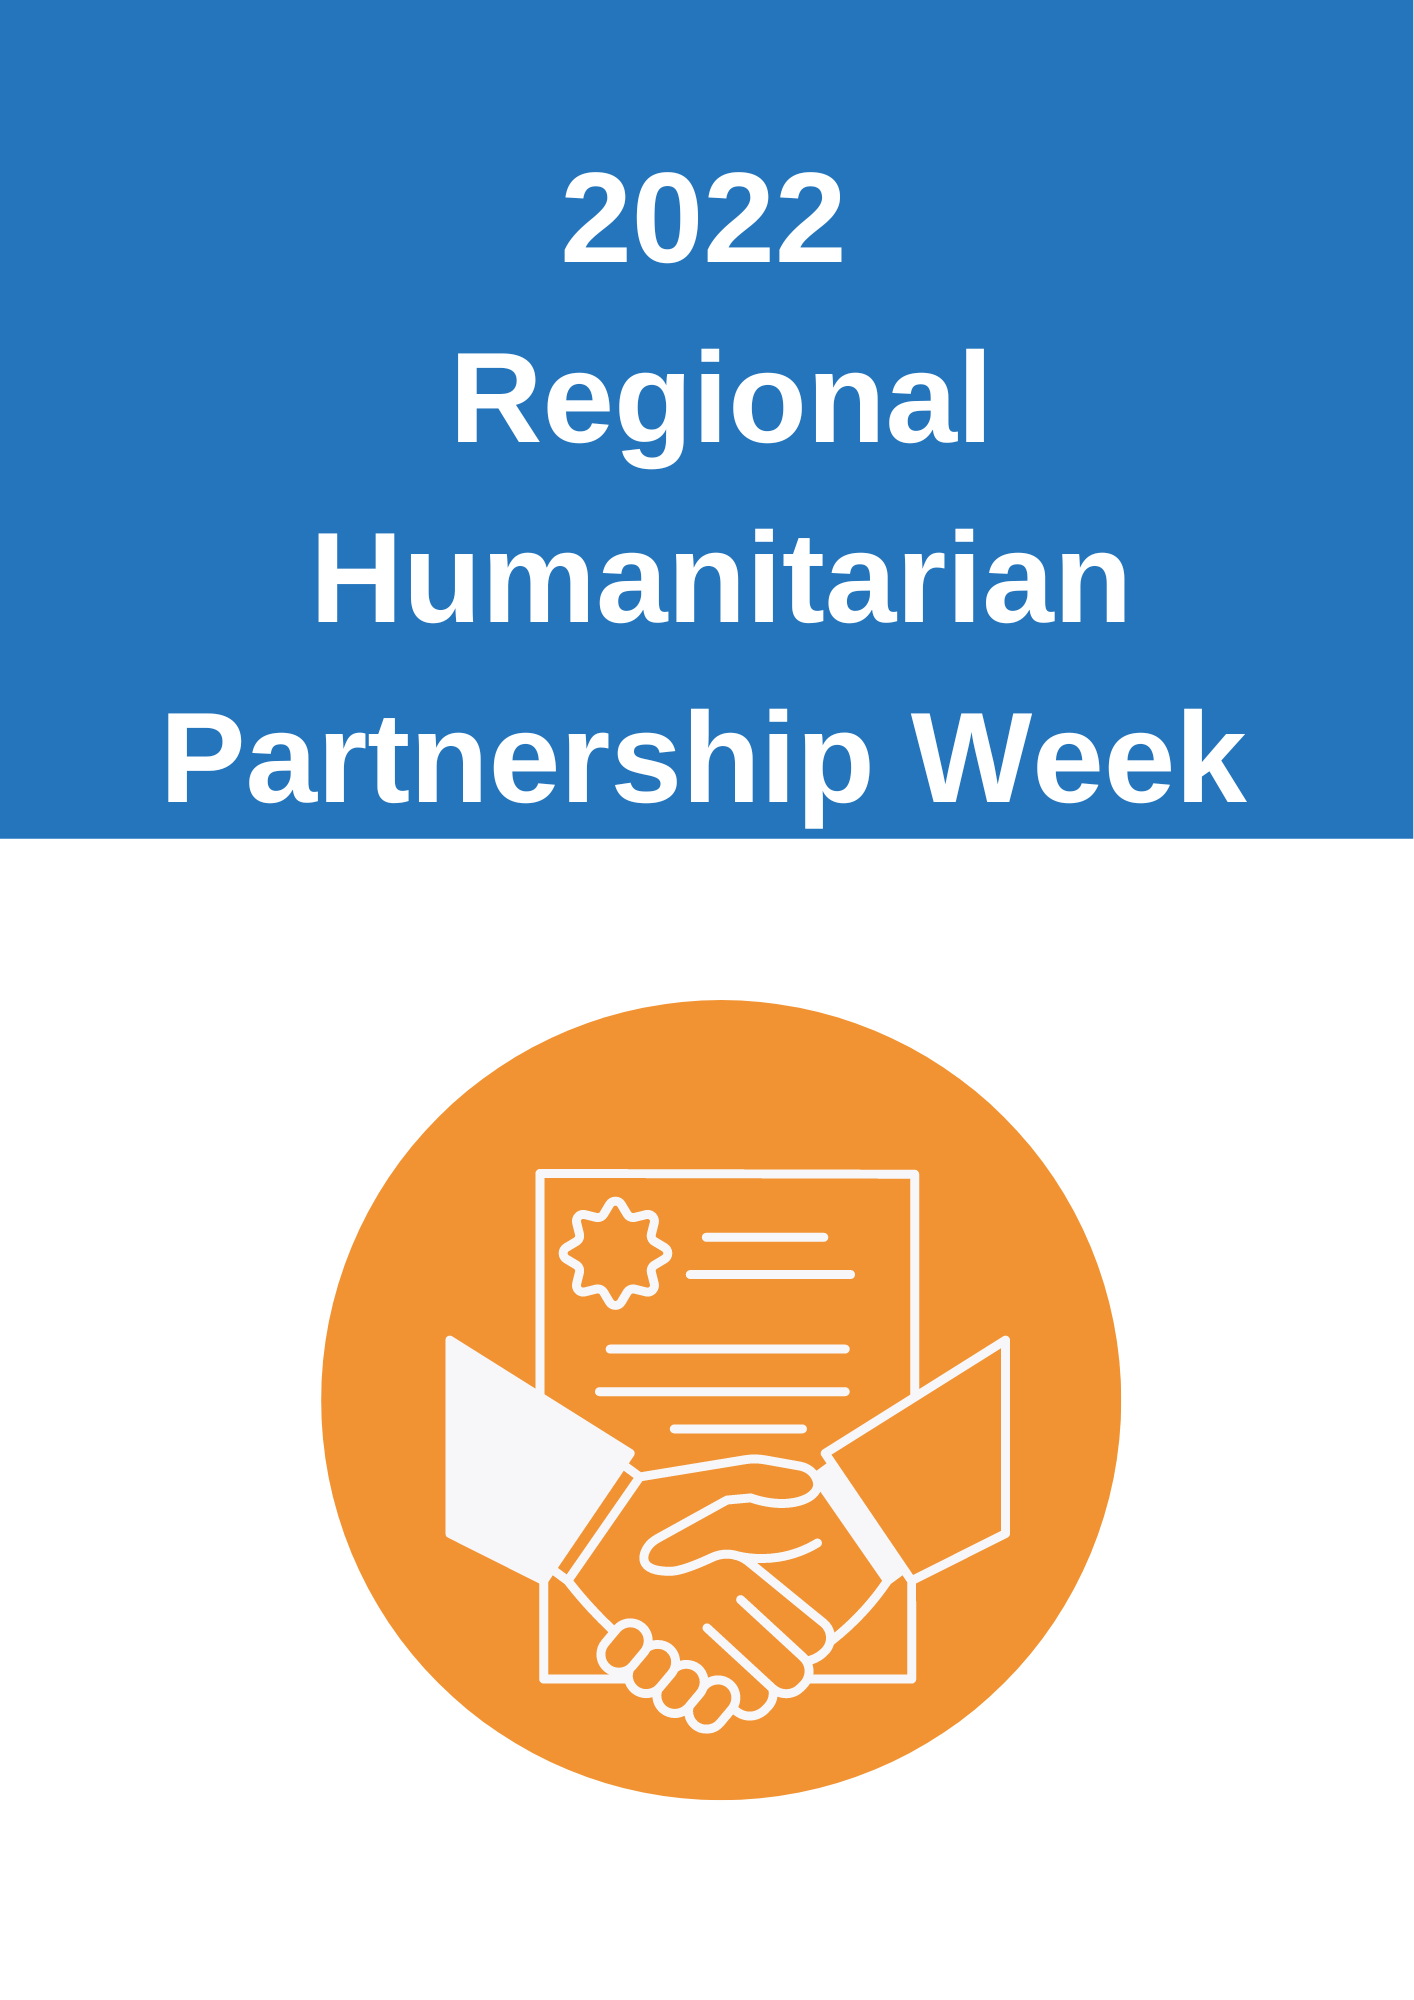 2022 Regional Humanitarian Partnership Week image